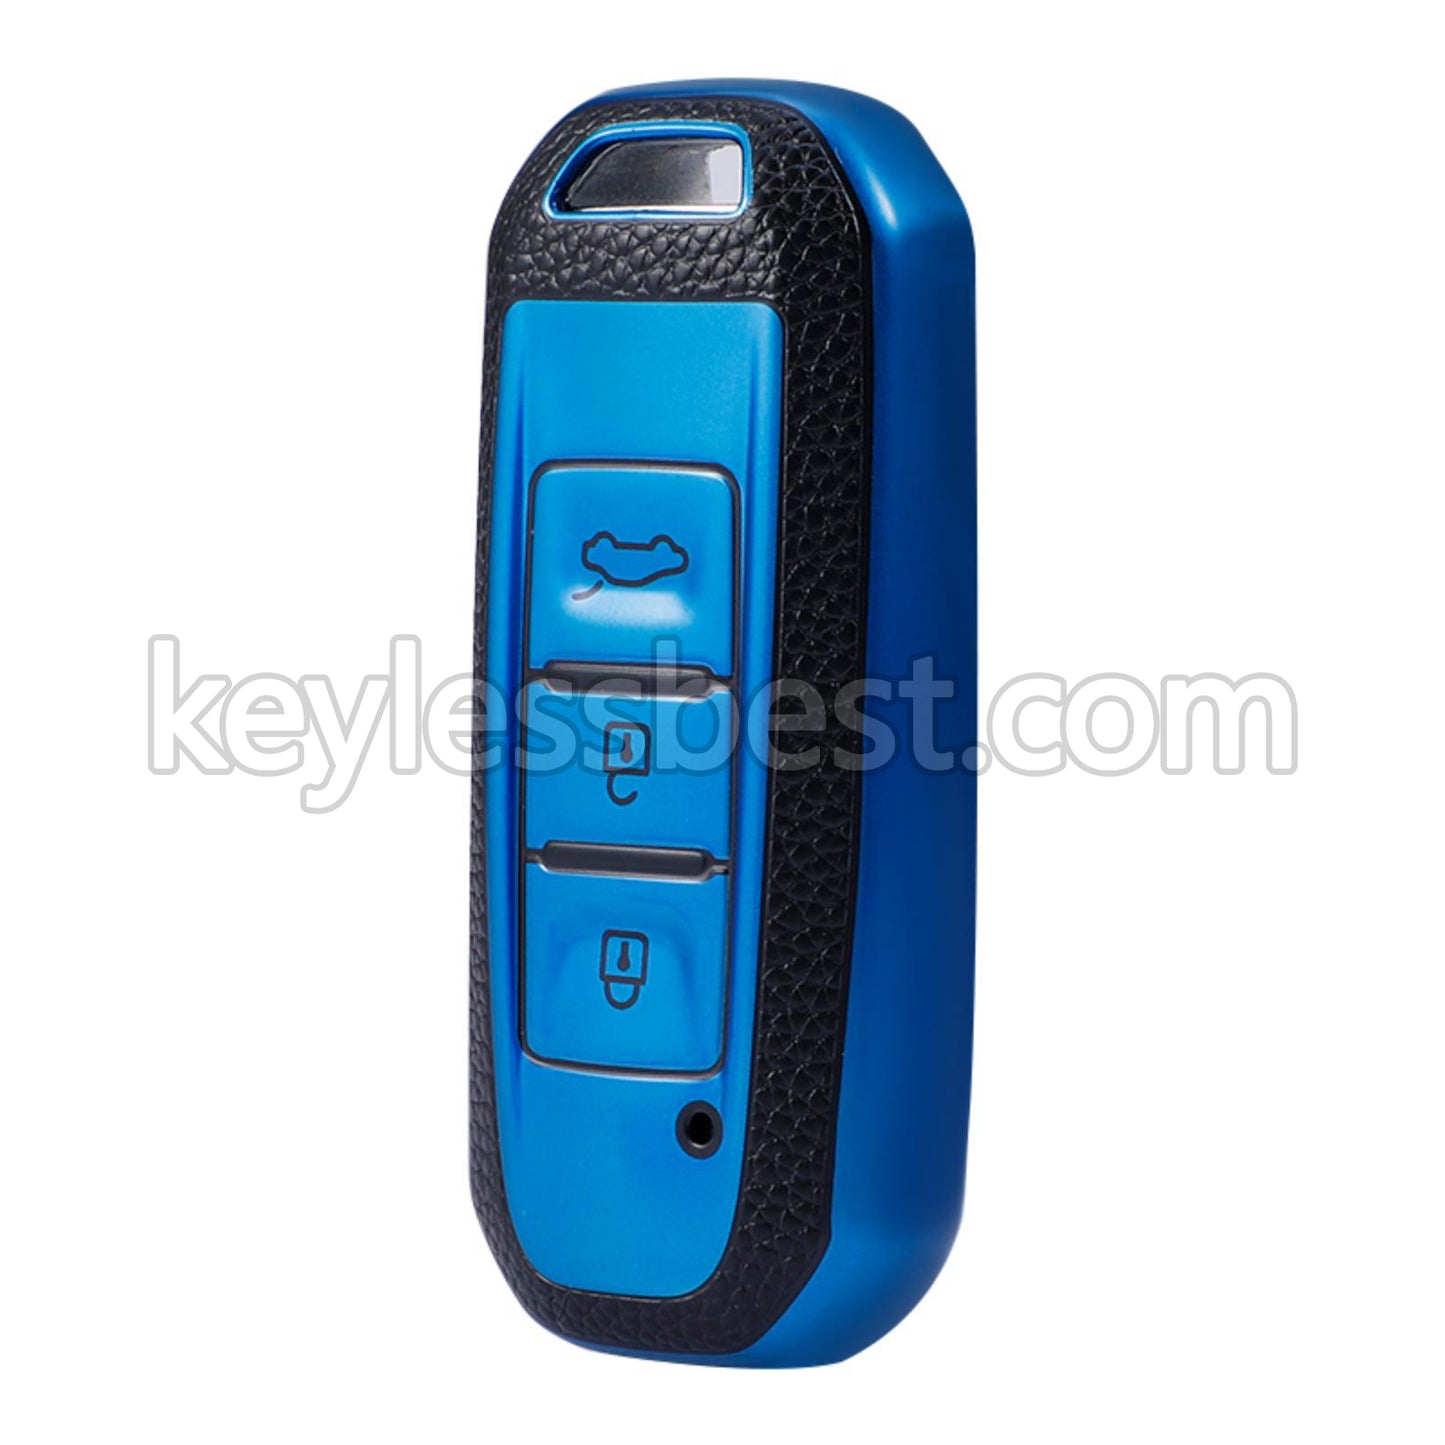 TPU Car Key cover For Bao Jun Car Key cover case holder